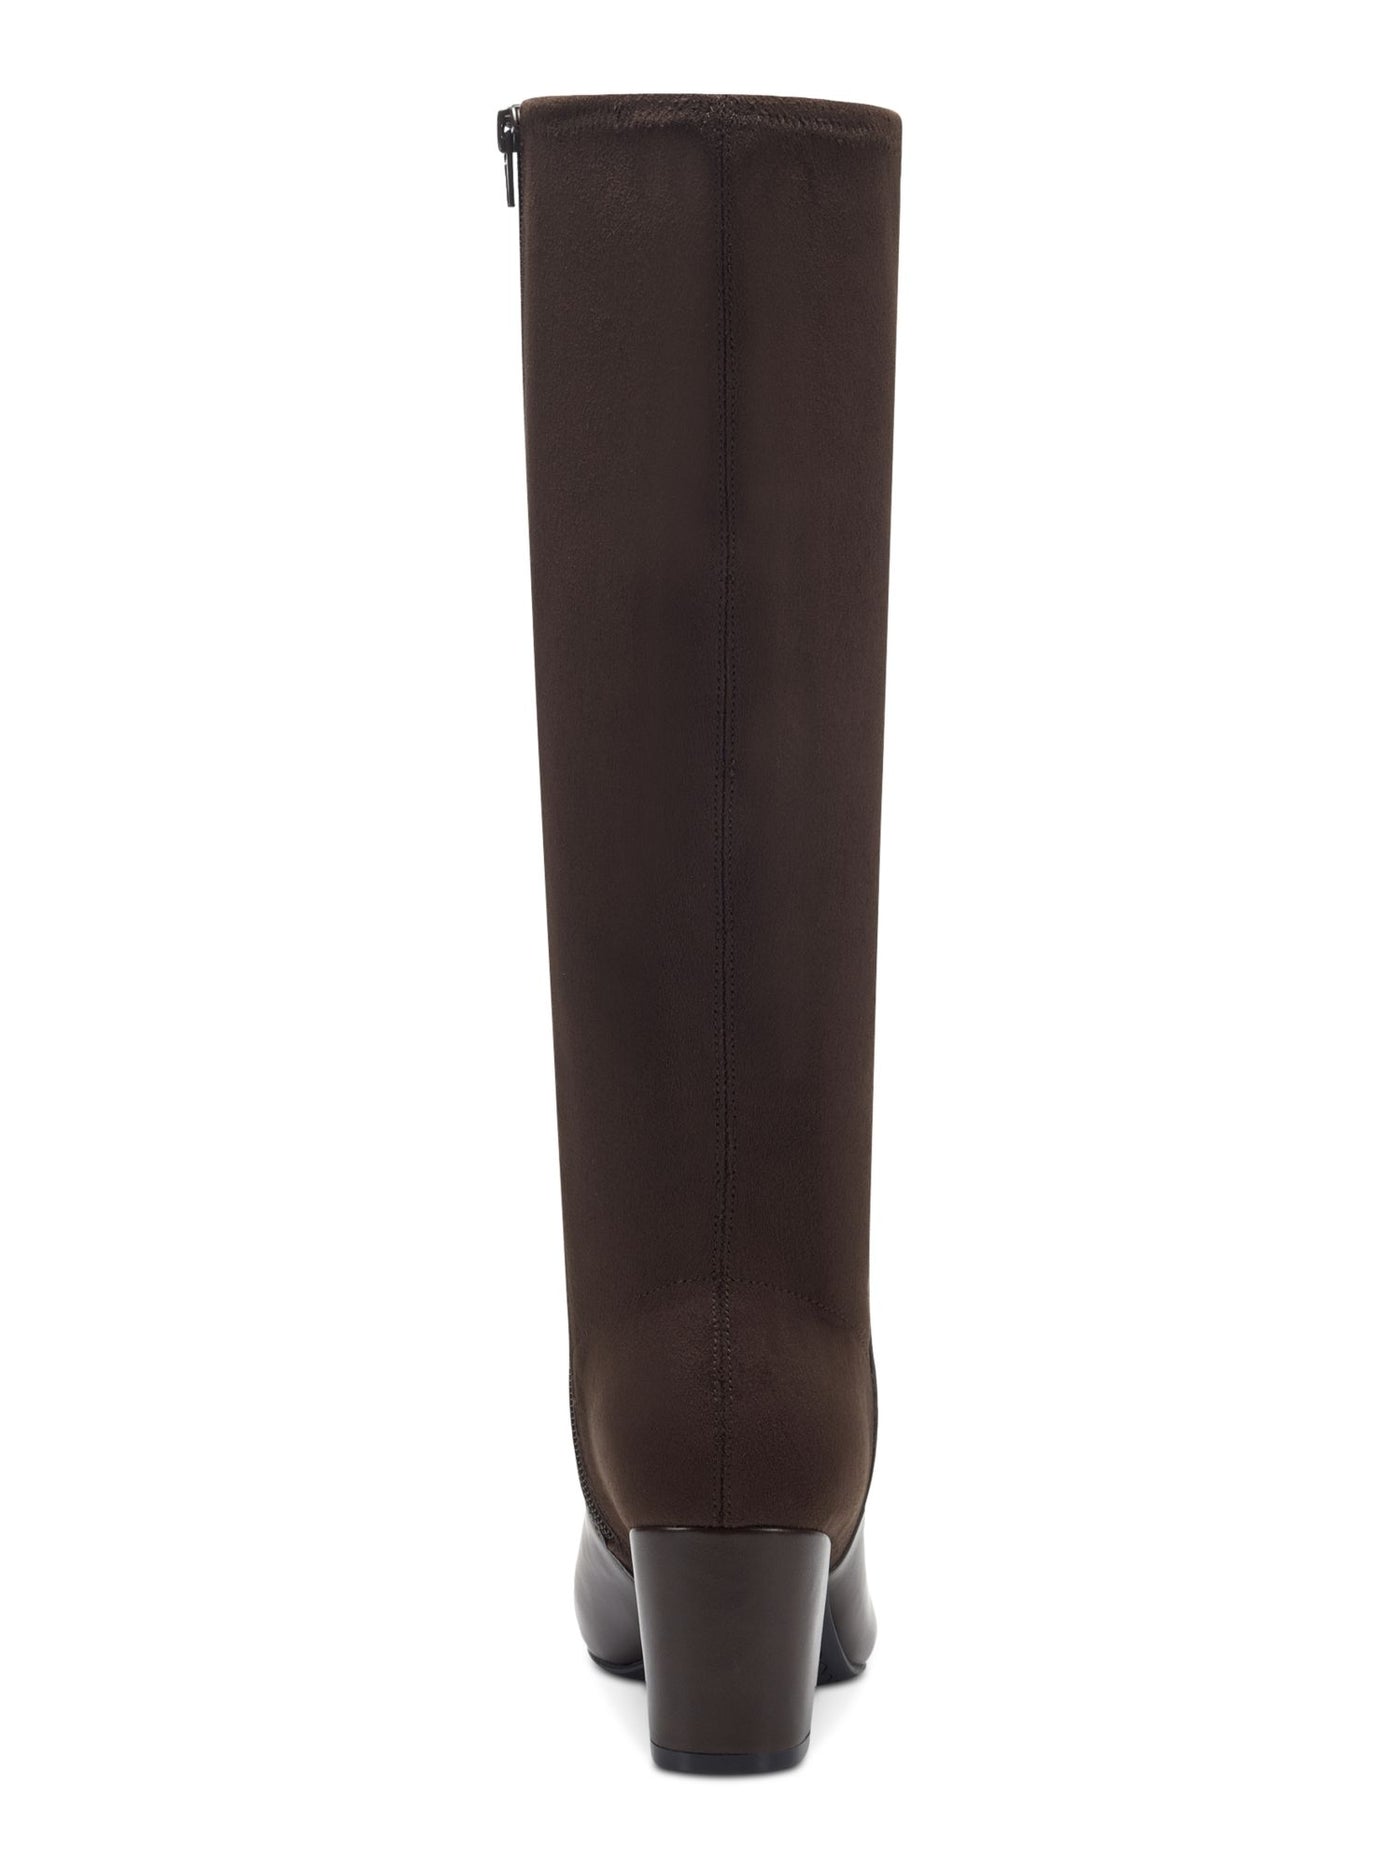 CHARTER CLUB Womens Chocolate Brown Mixed Media Cushioned Sacaria Almond Toe Block Heel Zip-Up Dress Boots 6 M